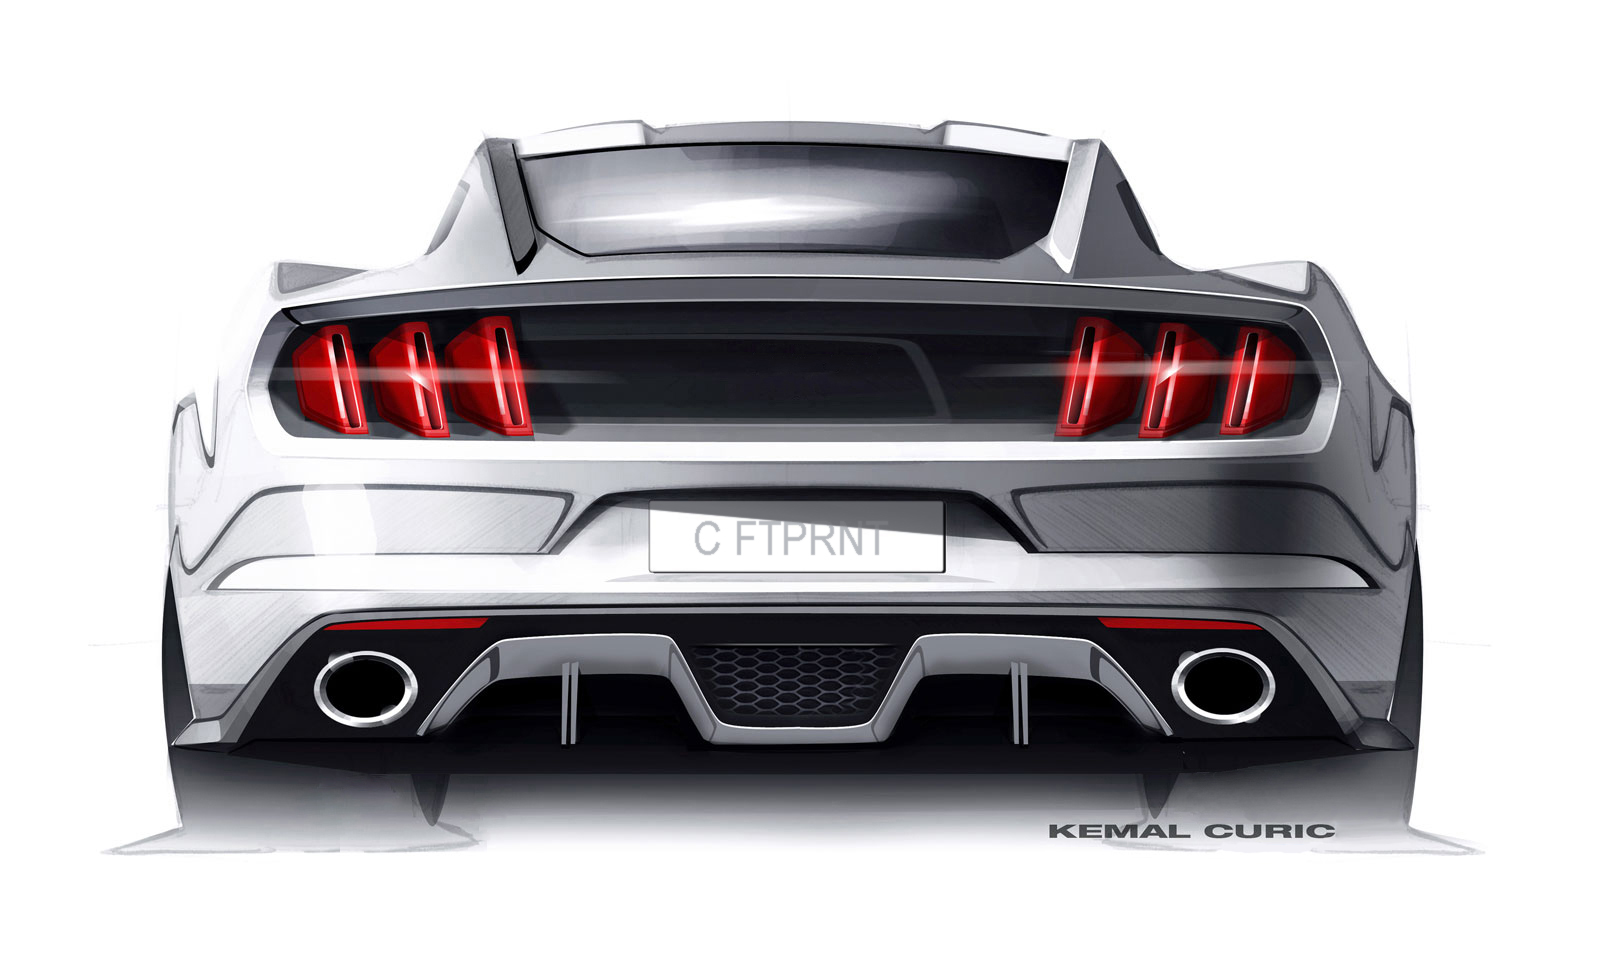 01-Ford-Mustang-Design-Sketch-by-Kemal-Curic-0313jpgoriginal.jpg